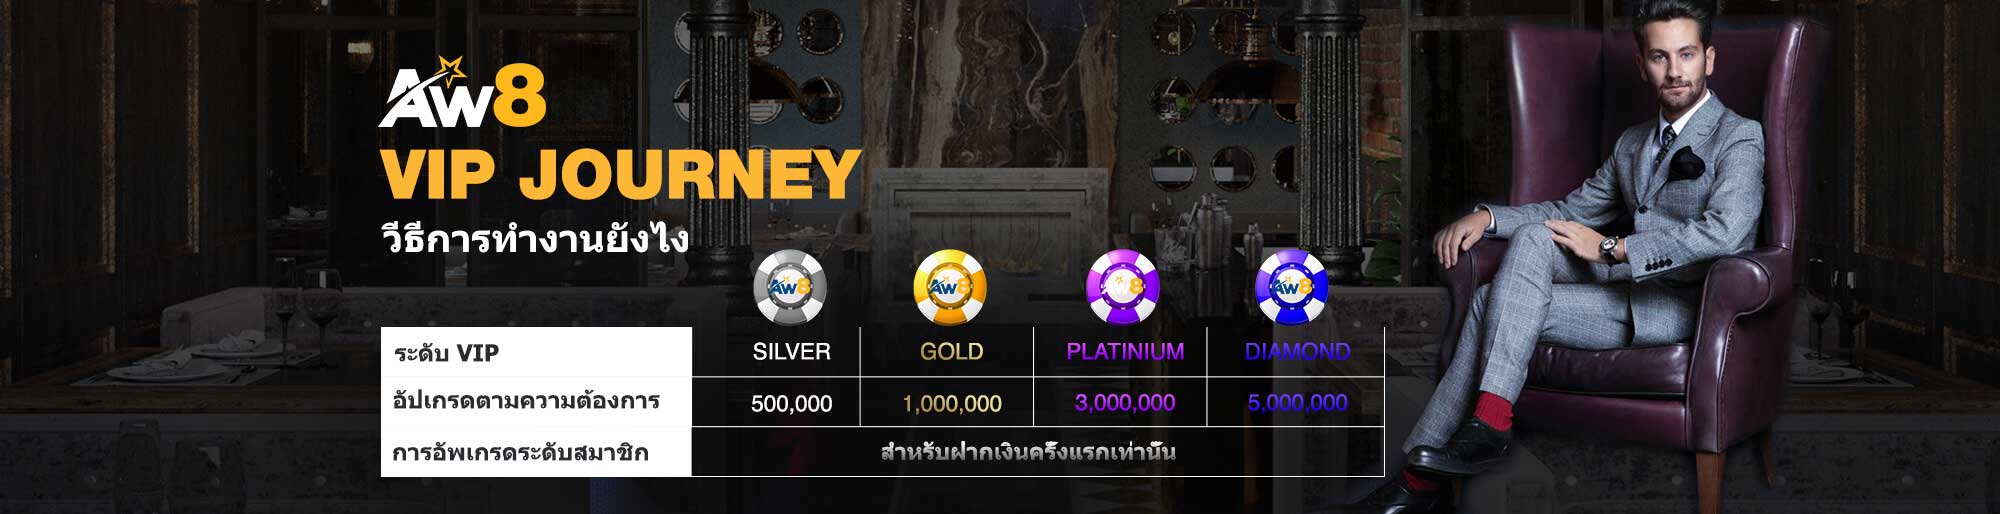 AW8 vip casino banner thai 2